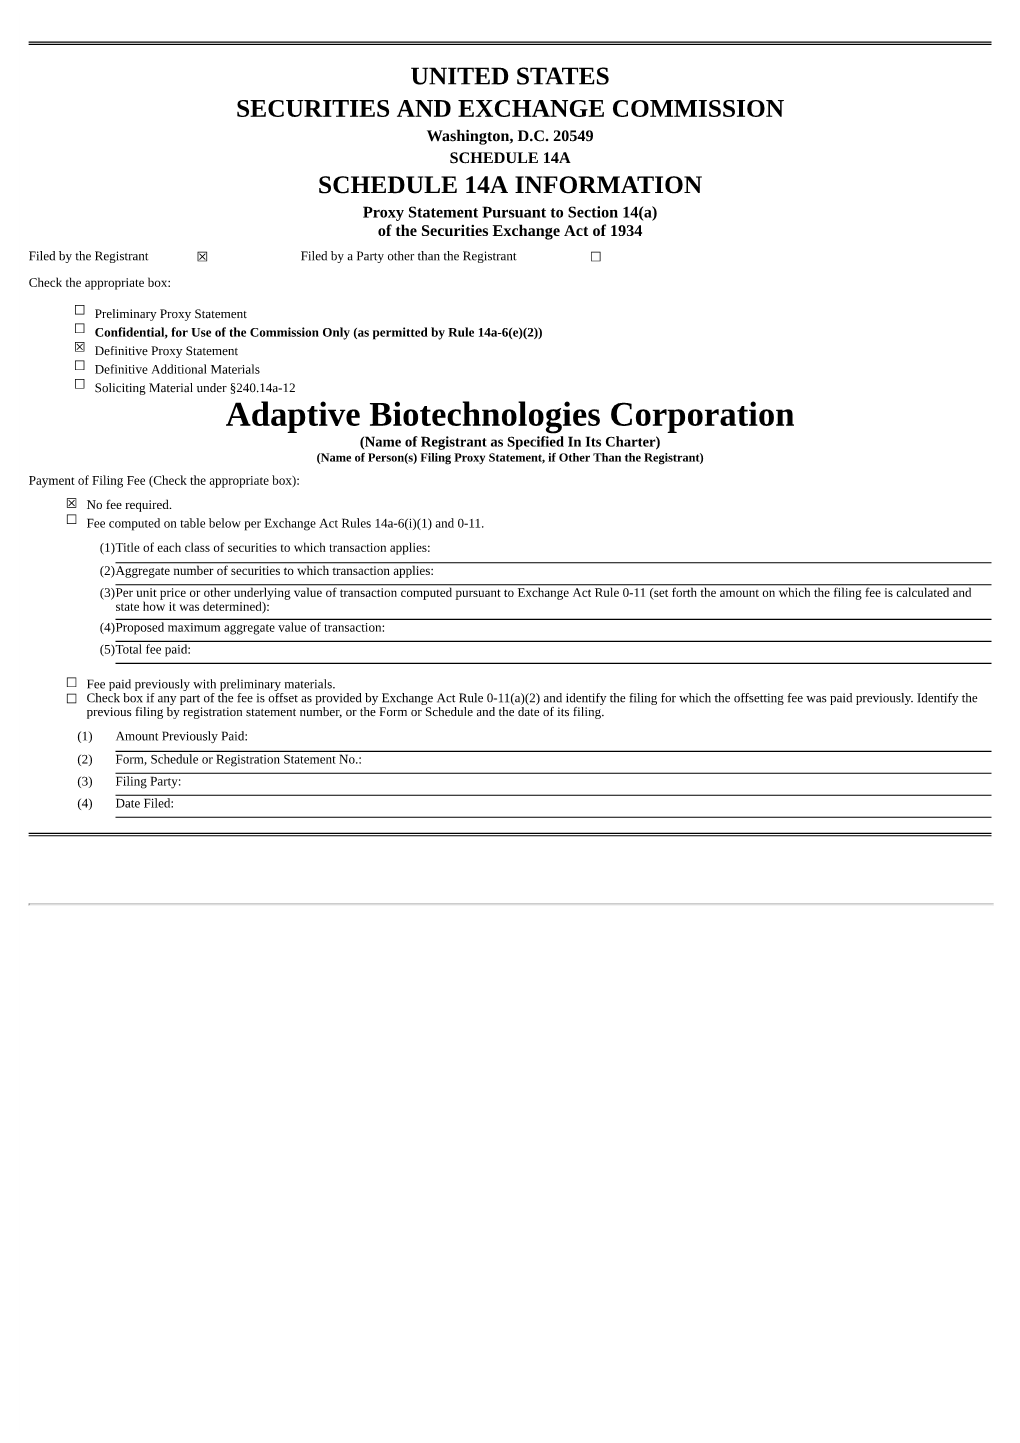 Adaptive Biotechnologies Corporation